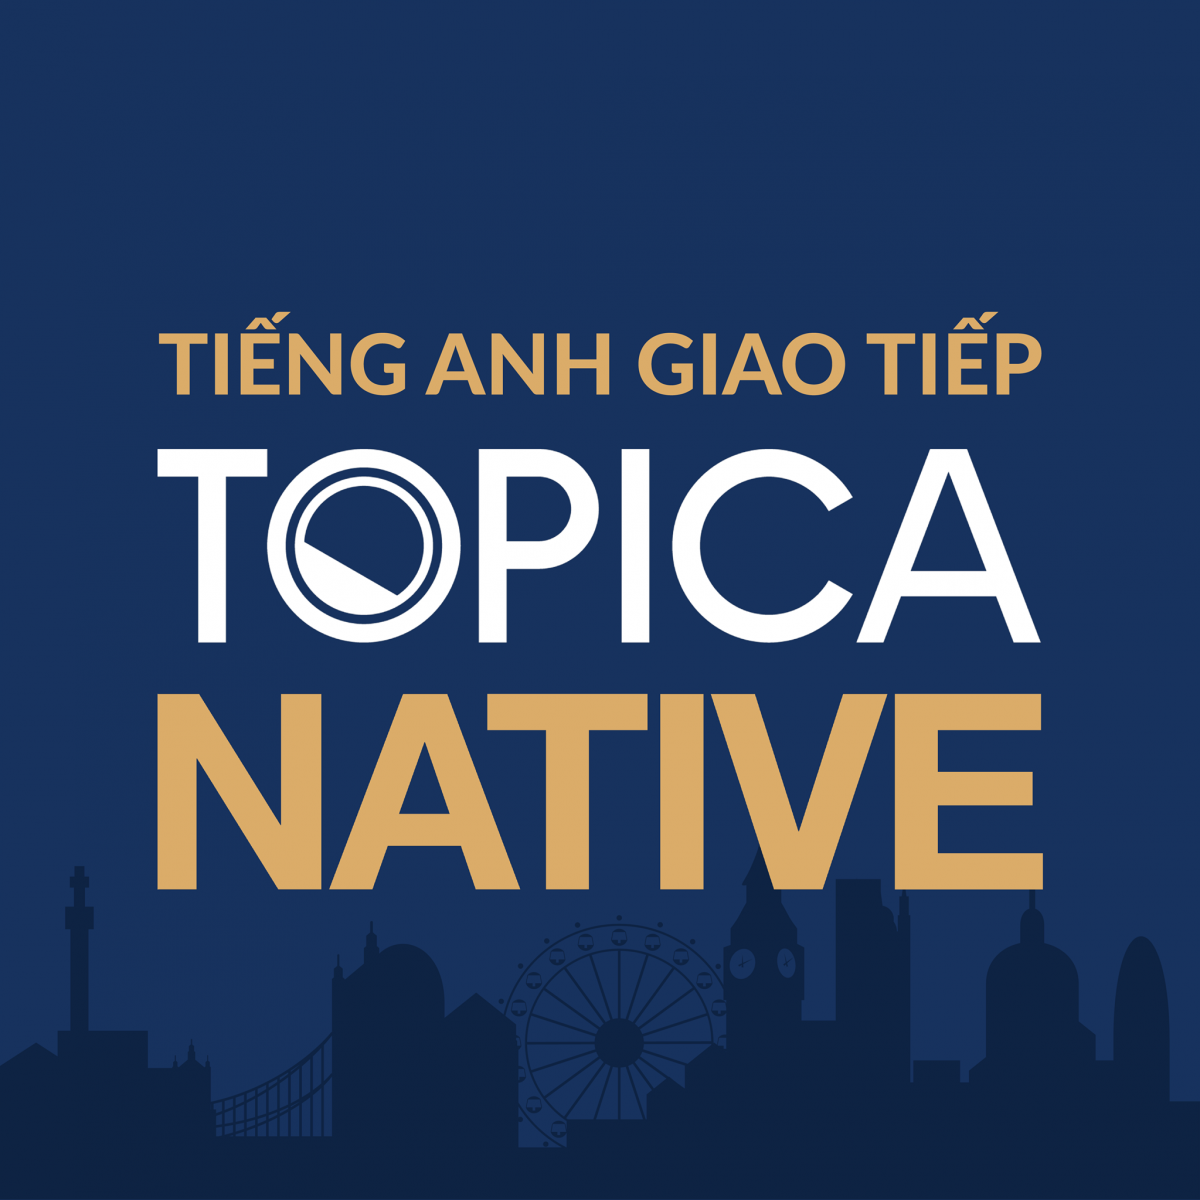 Thông tin về Tiếng Anh giao tiếp Topica Native